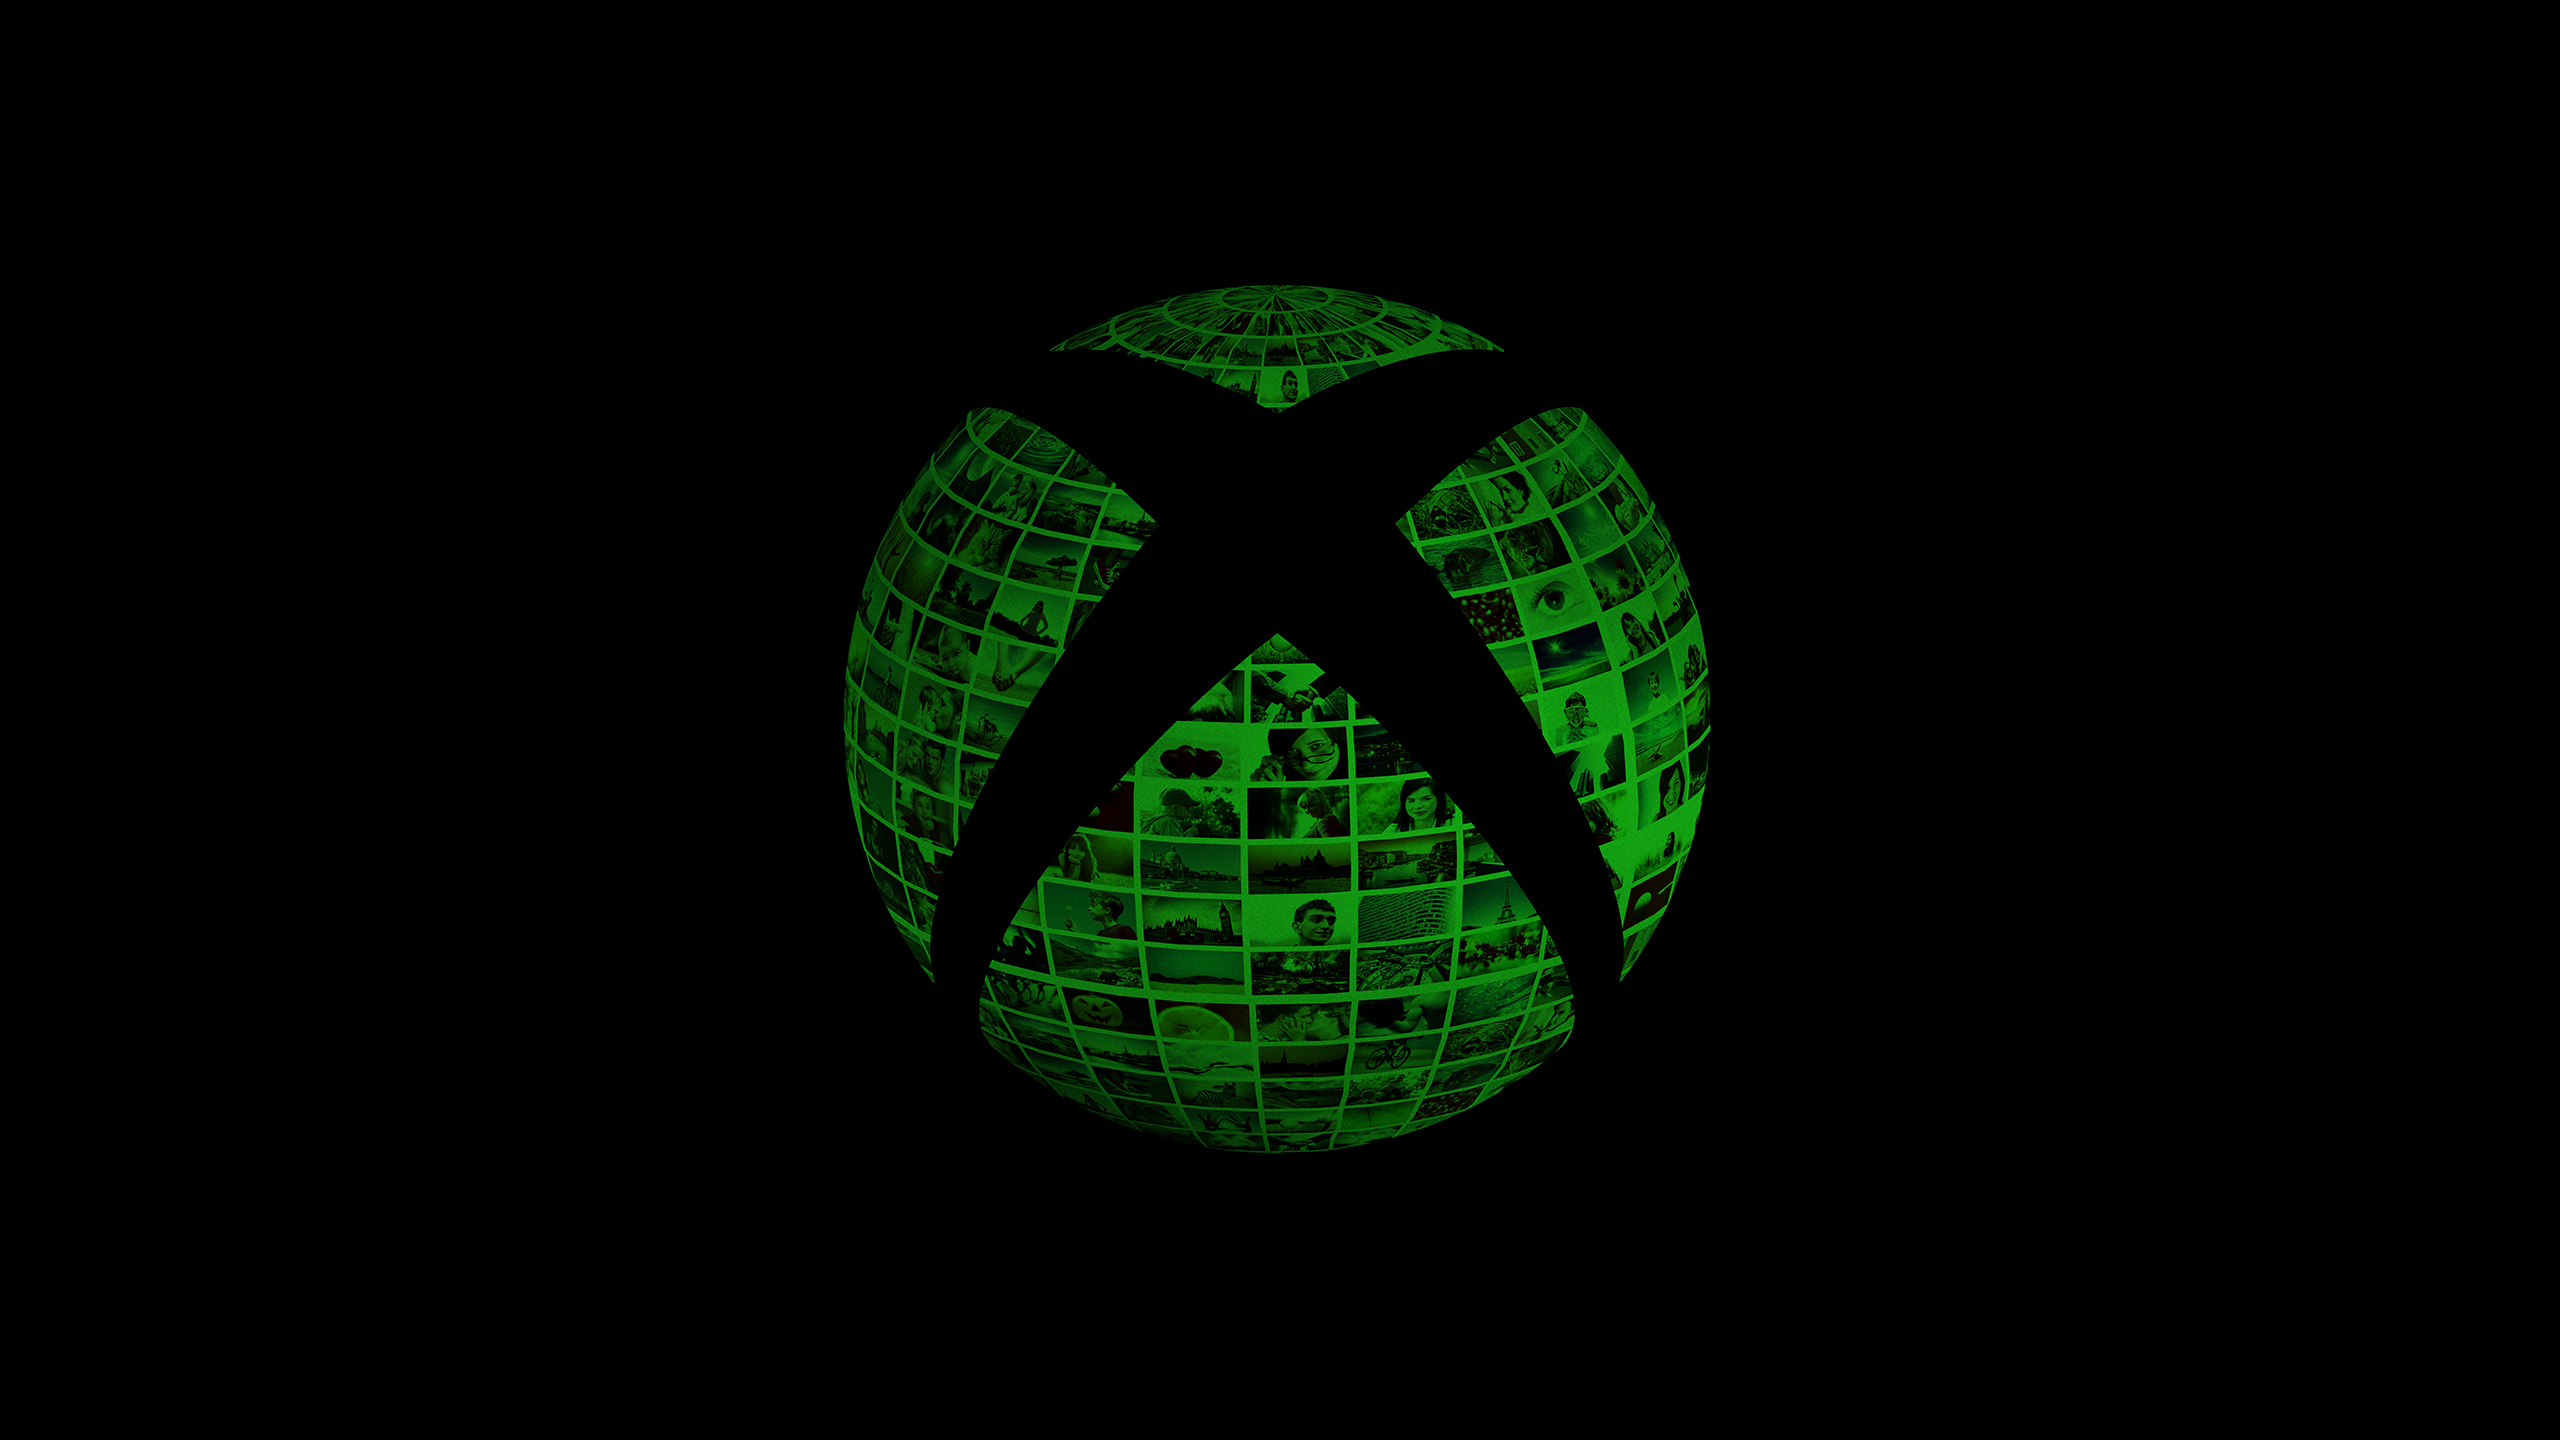 Green Xbox logo on a black background, HD desktop wallpaper.